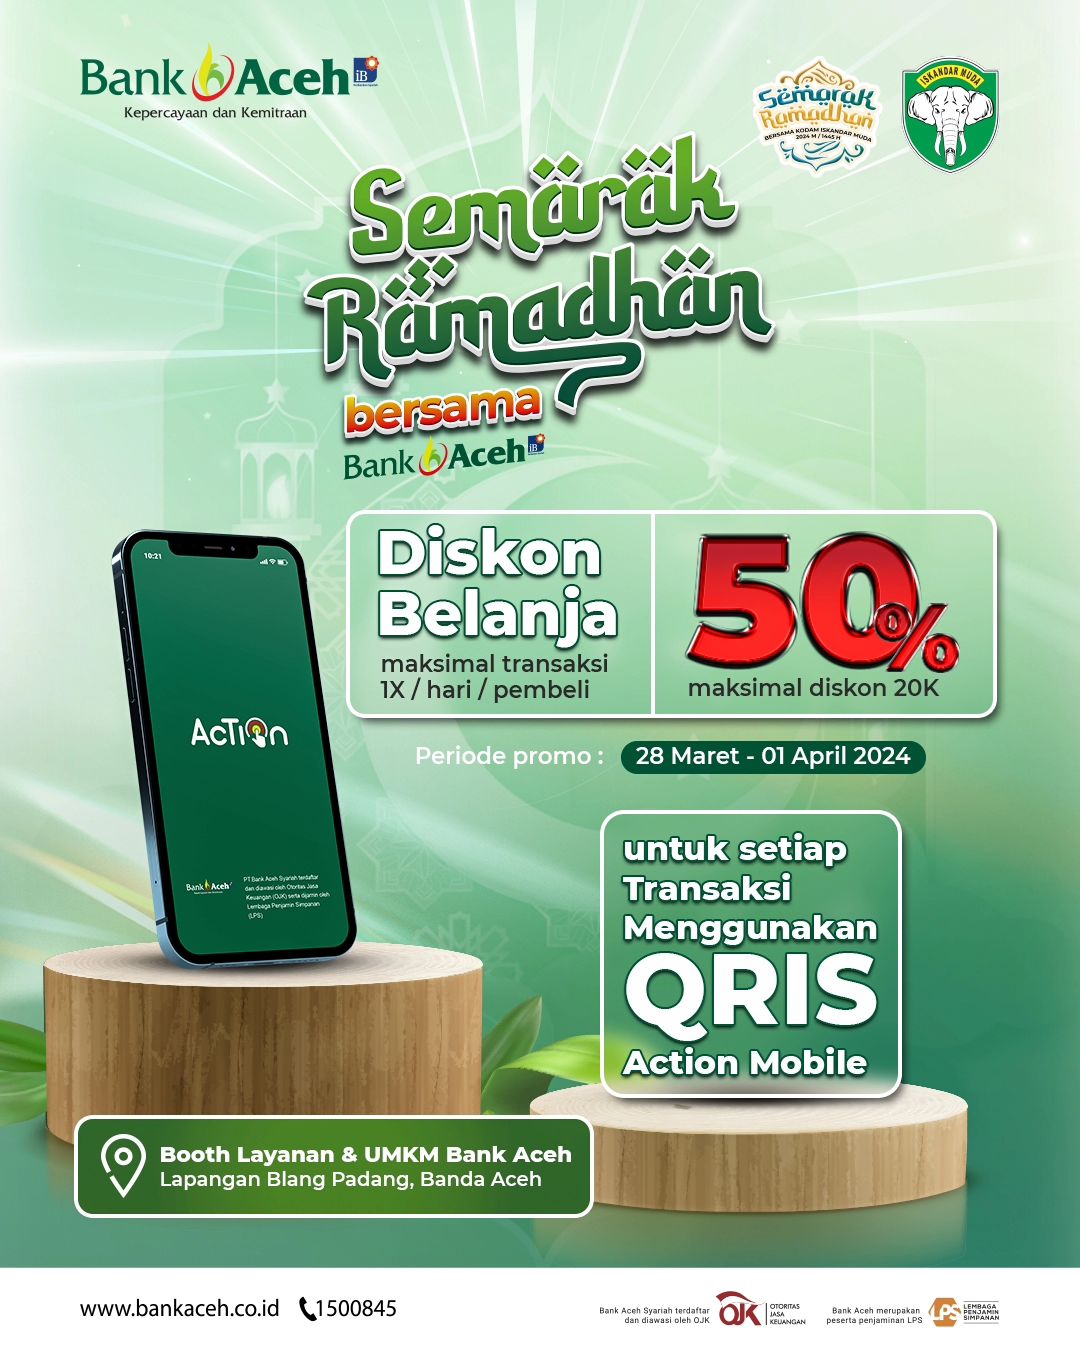 Semarak Ramadhan 1445 H bersama Bank Aceh Syariah, Diskon Belanja 50%